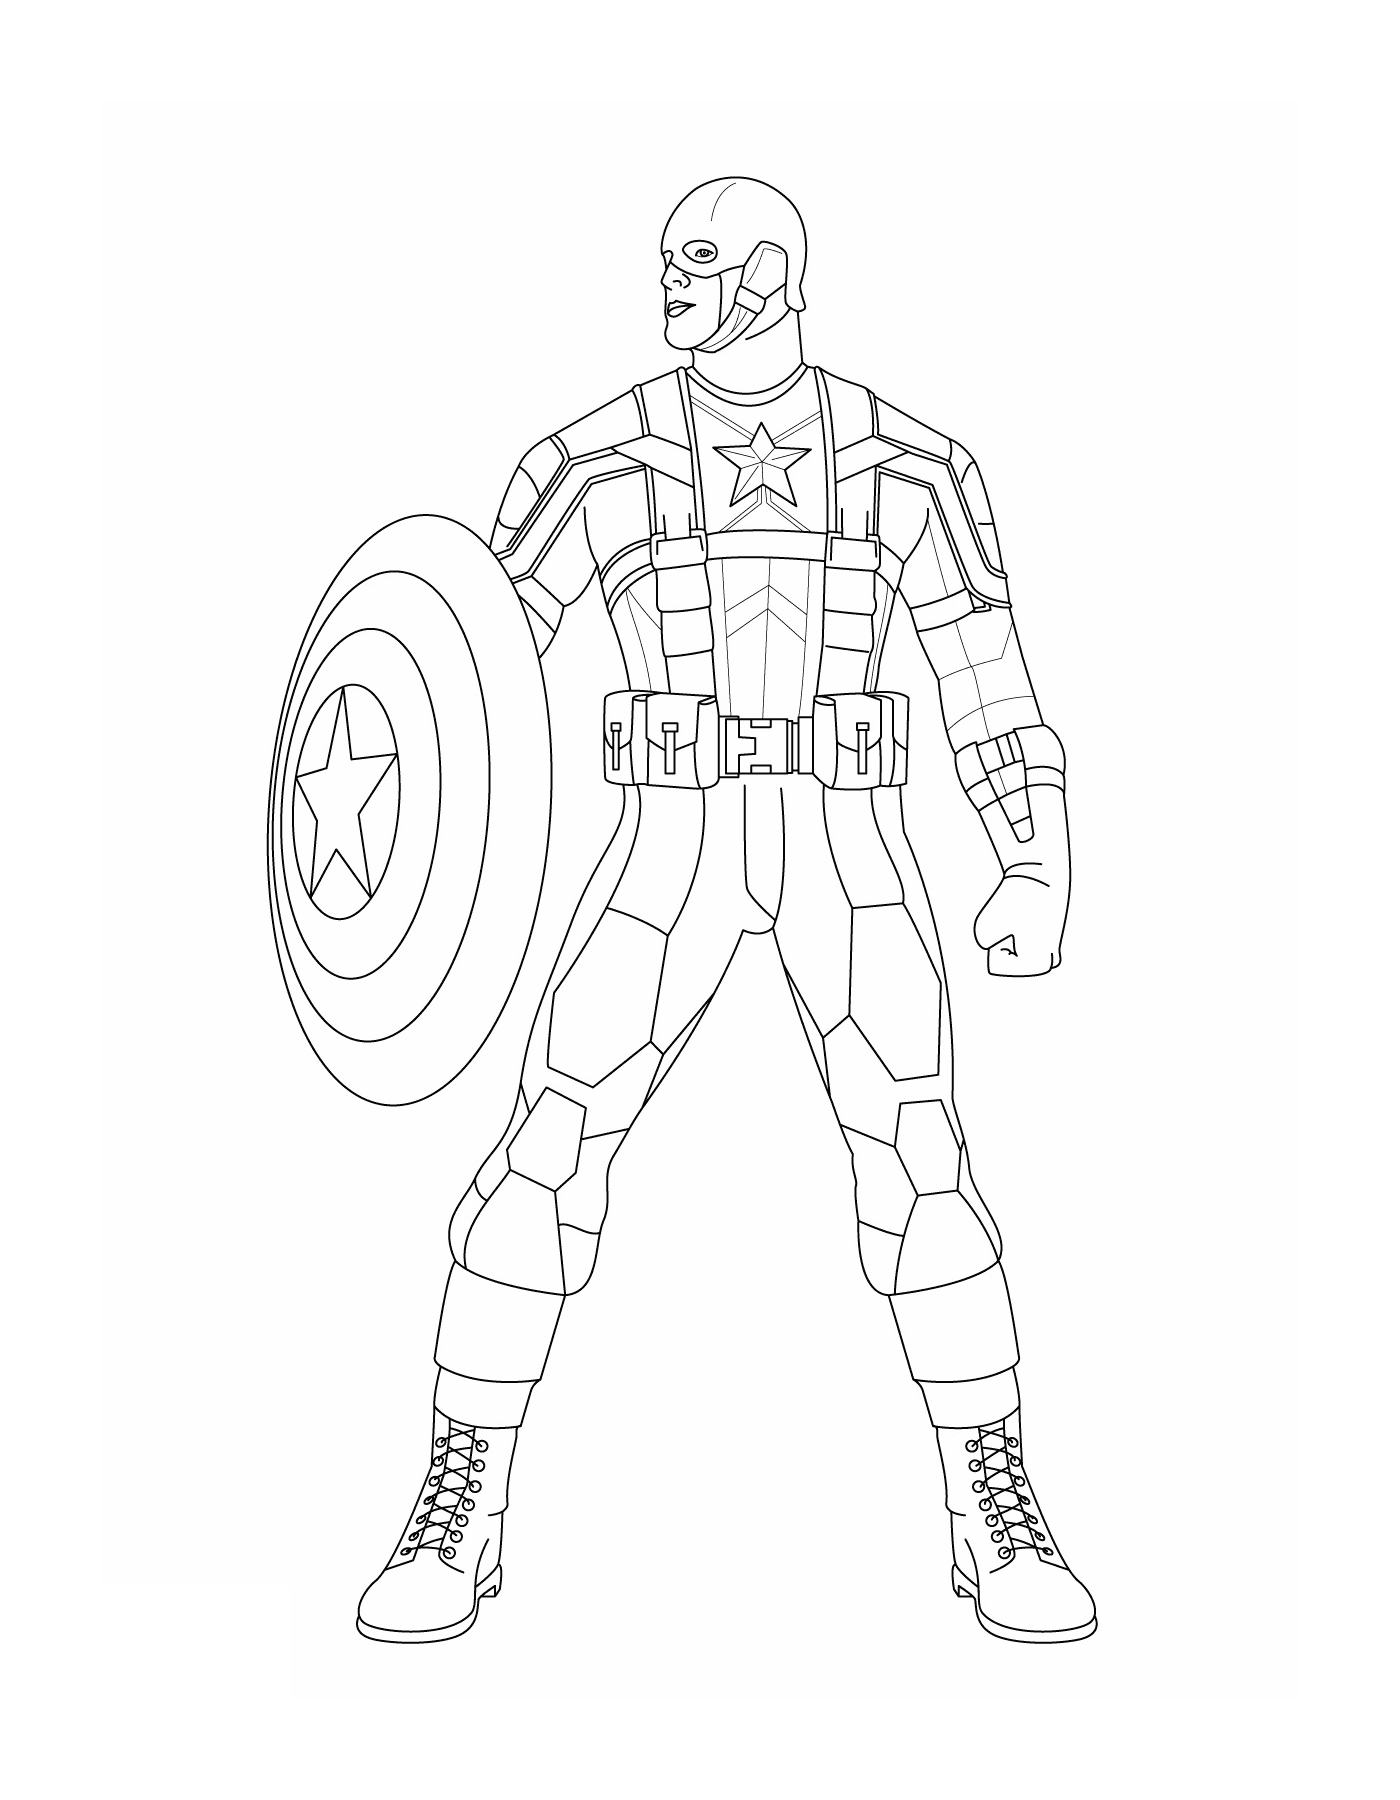  Colouring Captain America 11, image of a Captain America 